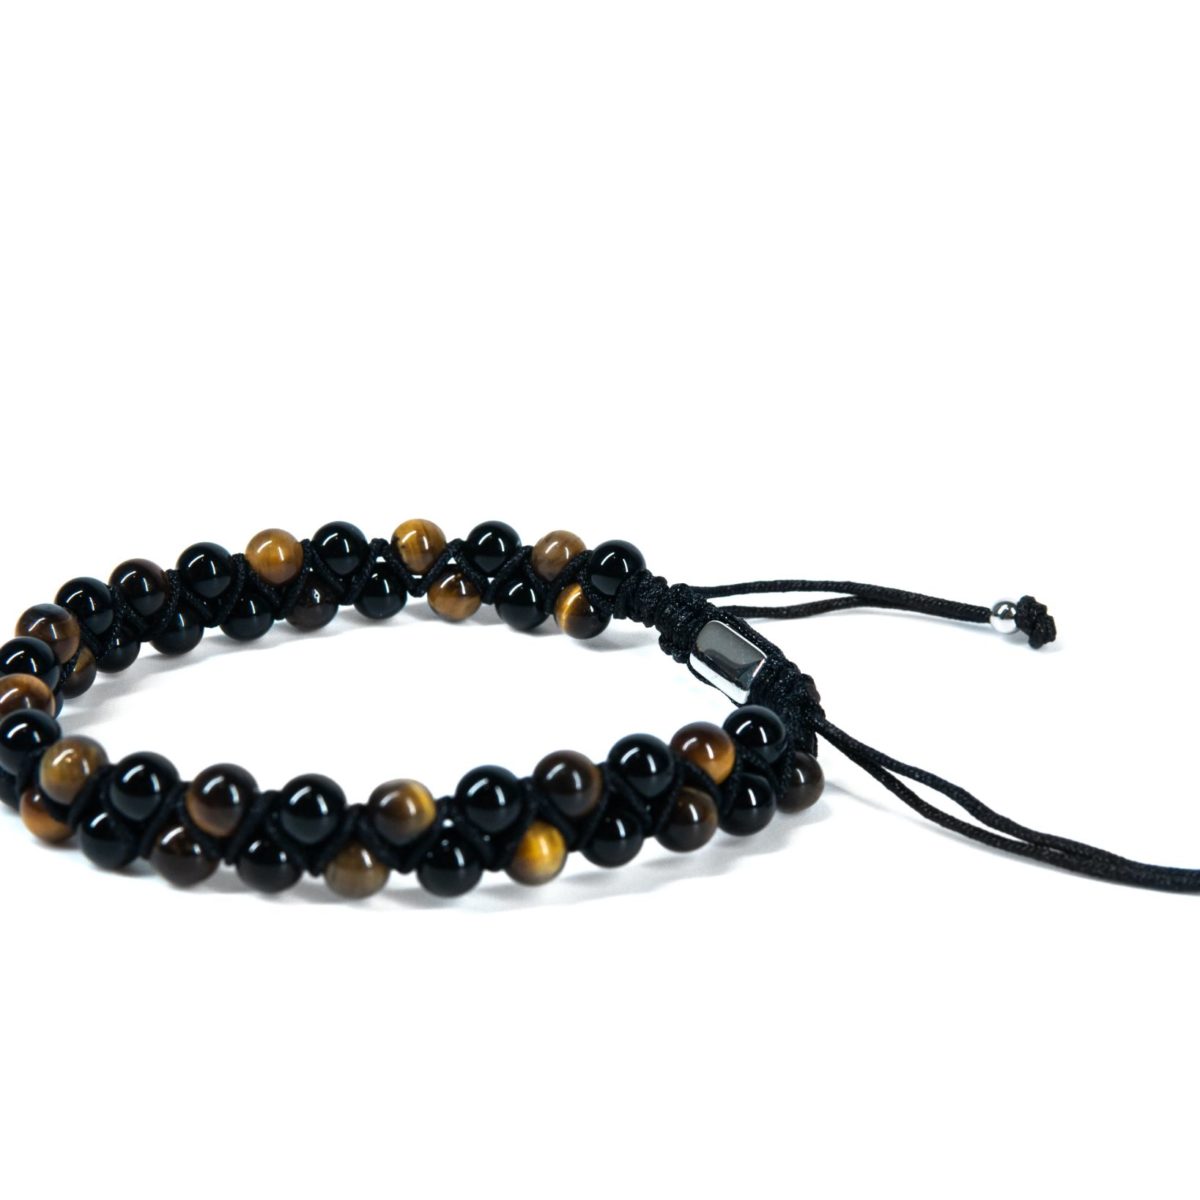 https://m.clubbella.co/product/edmund-tiger-eyes-black-onyx-bracelet/ Edmund Tiger Eyes Black Onyx bracelet (3)